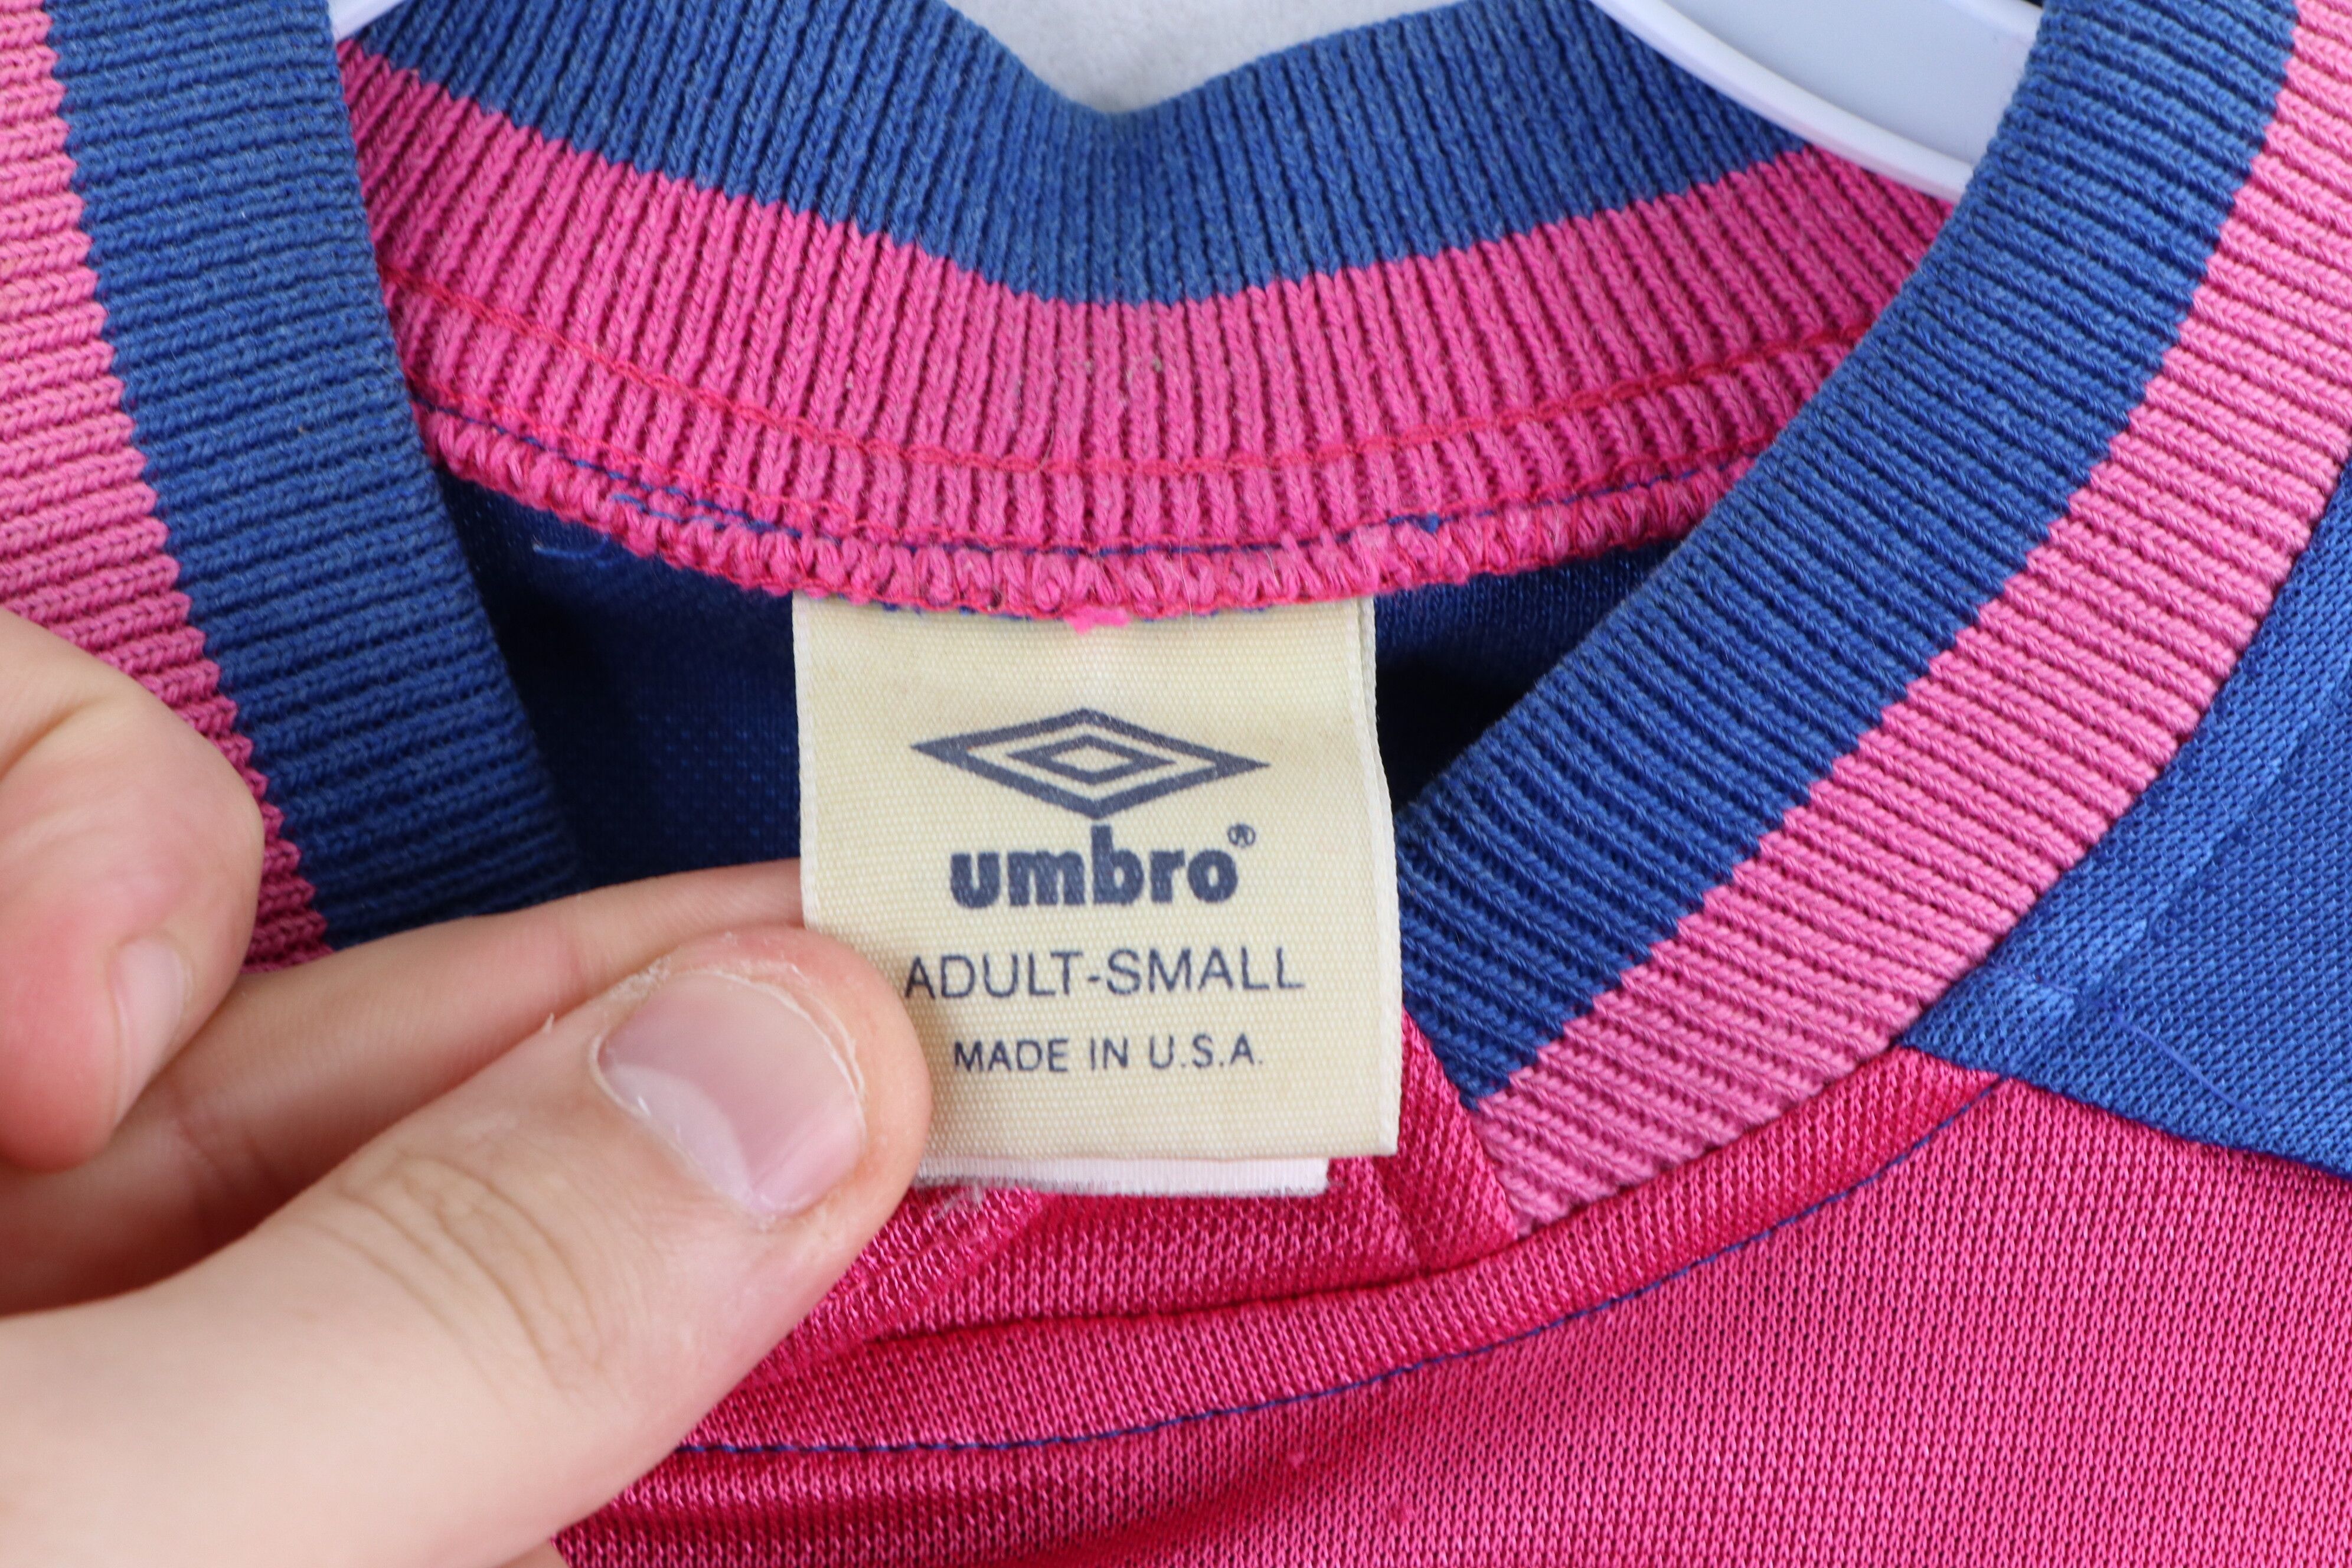 Vintage Vintage 90s Umbro Distressed Padded Goalie Jersey Pink USA Size US S / EU 44-46 / 1 - 7 Thumbnail